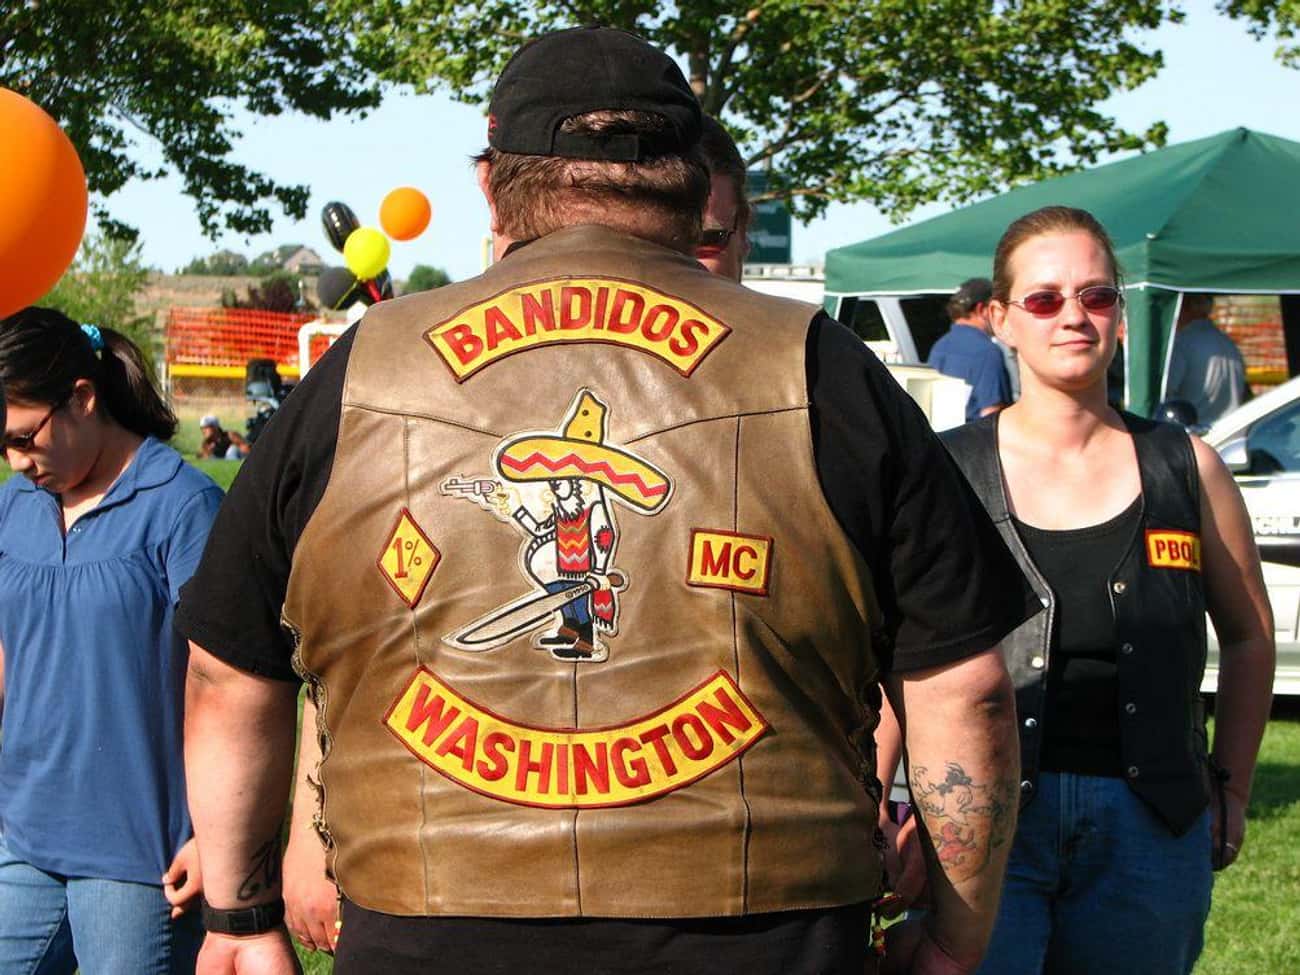 Us 1 club. Bandidos MC USA. Бандидос байкеры. Нашивки Bandidos MC. Bandidos Motorcycle Club.